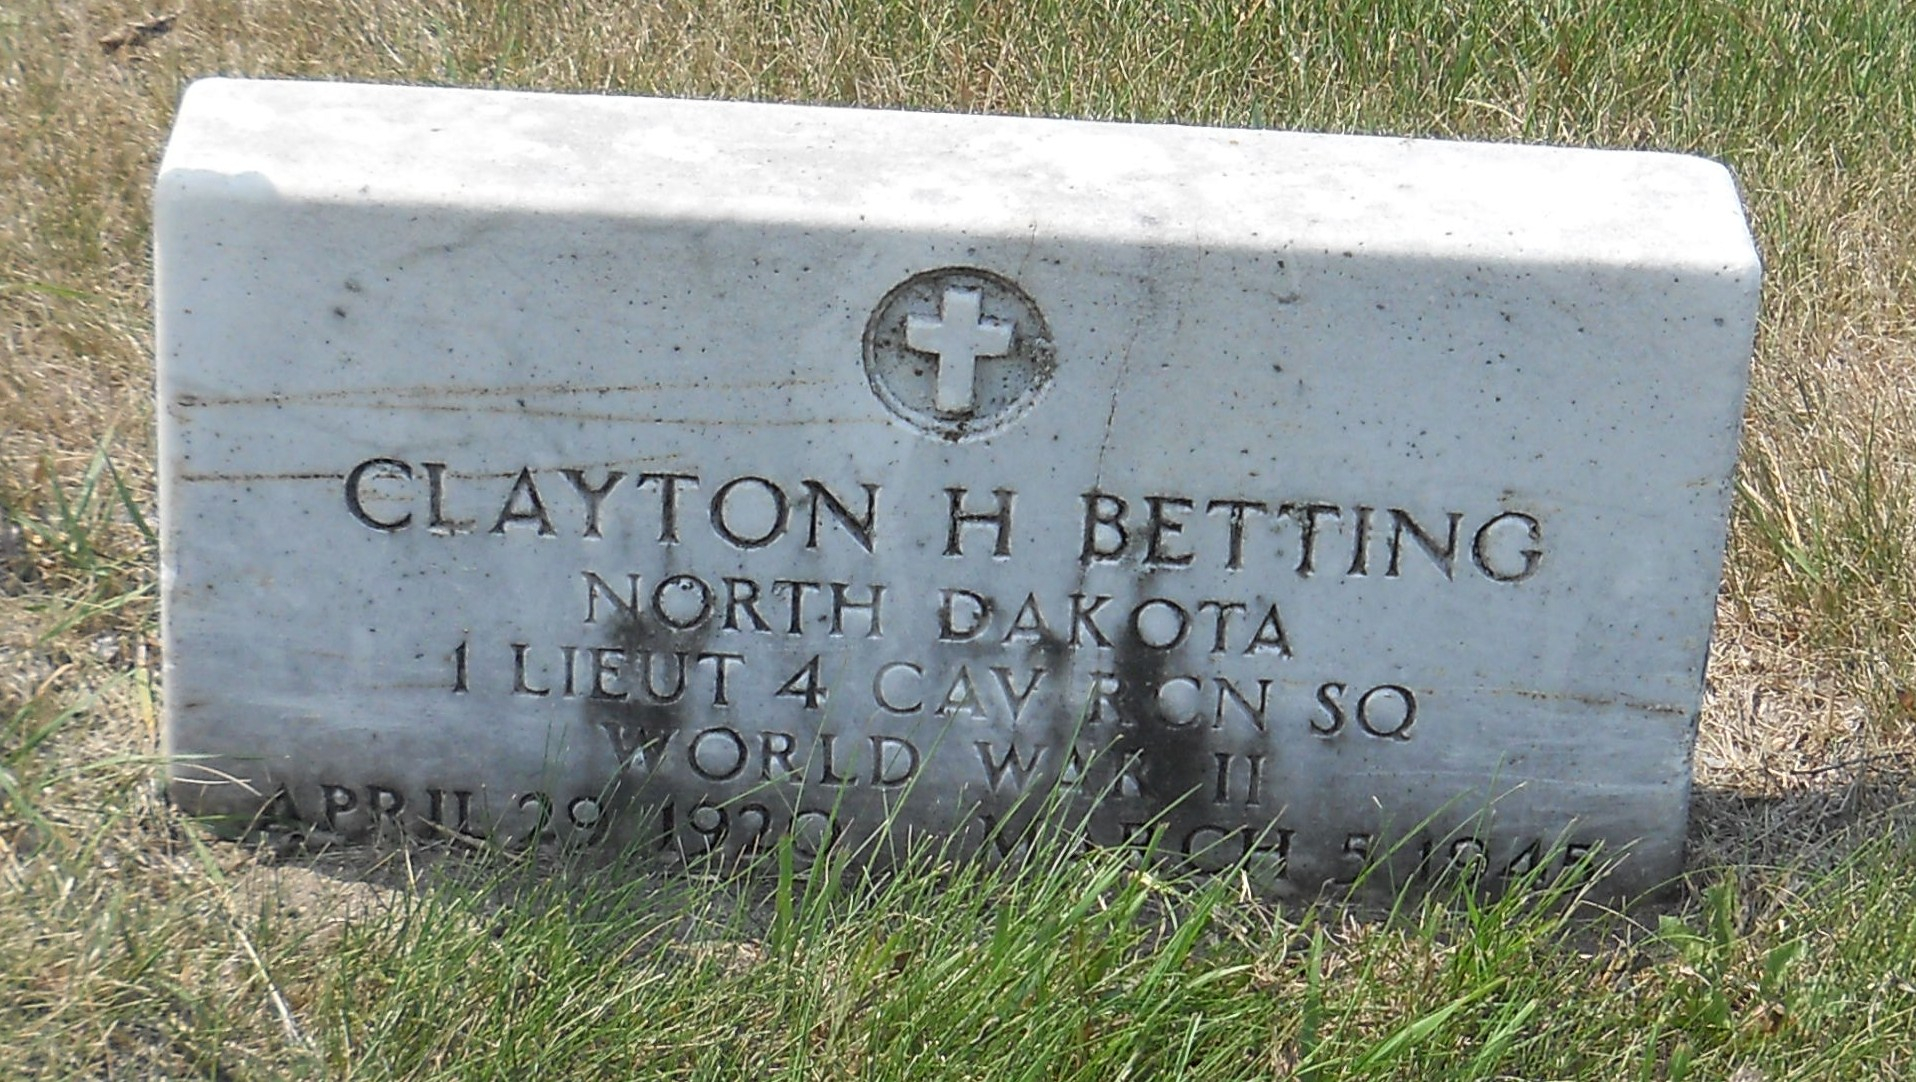 Clayton H. Betting photo